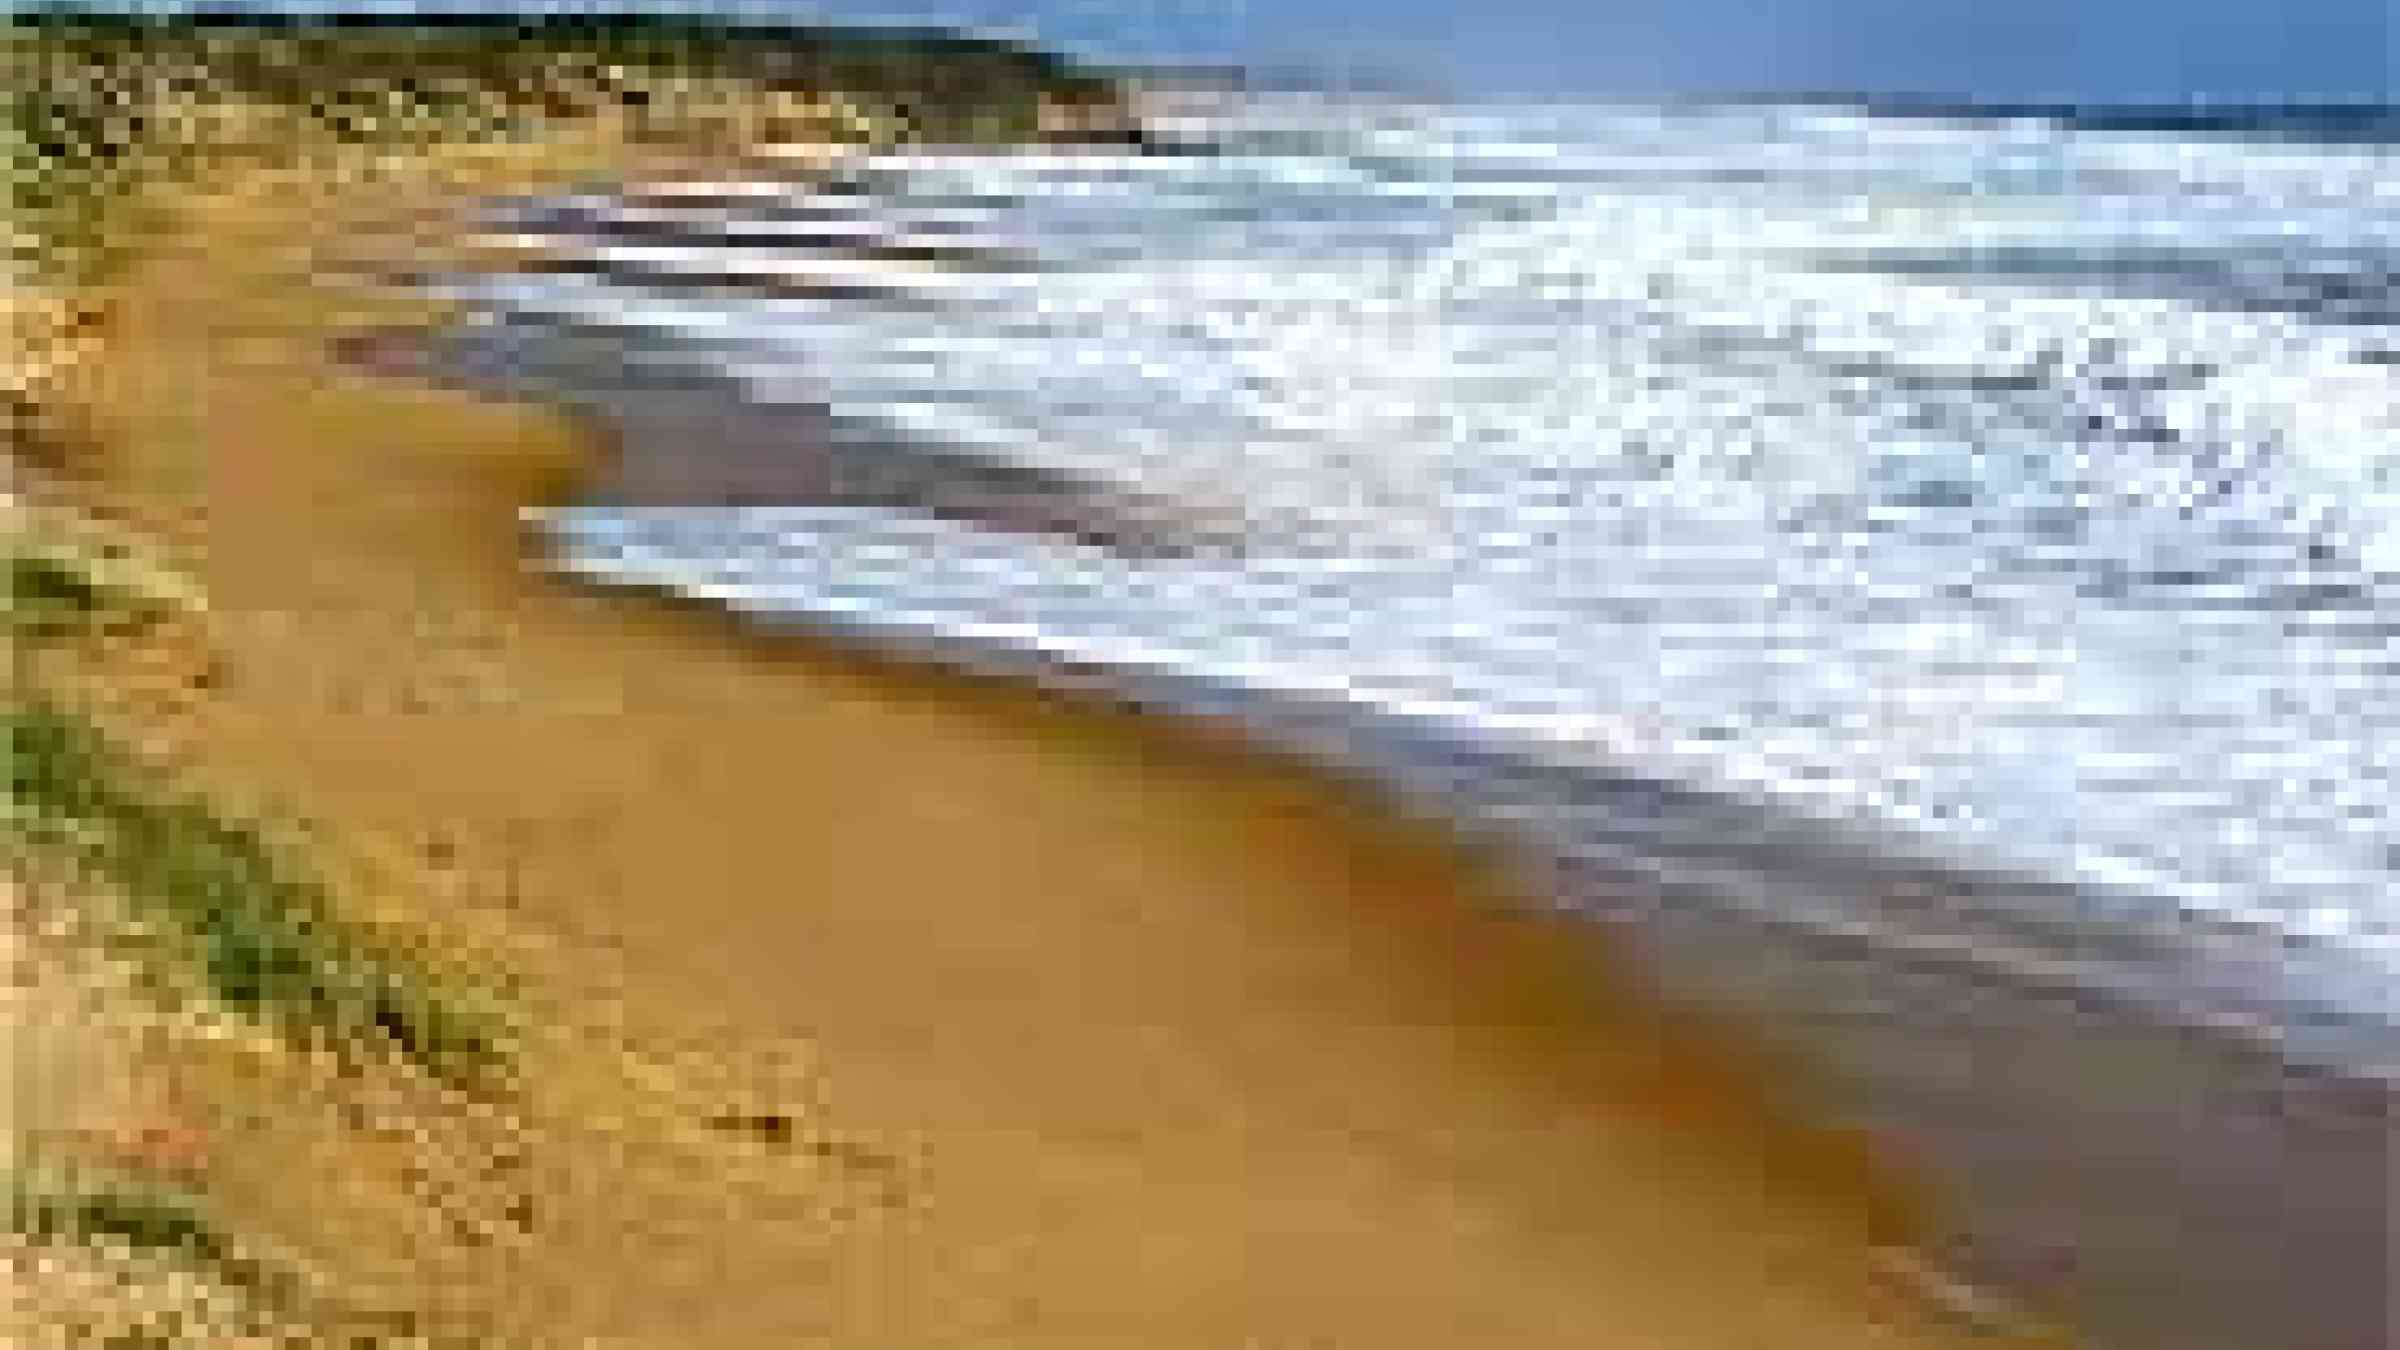 Photo of Kilcunda ocean beach, South Gippsland, Victoria, Australia by Flickr user Fotograf1v2 Creative Commons Attribution-Noncommercial-No Derivative Works 2.0 Generic